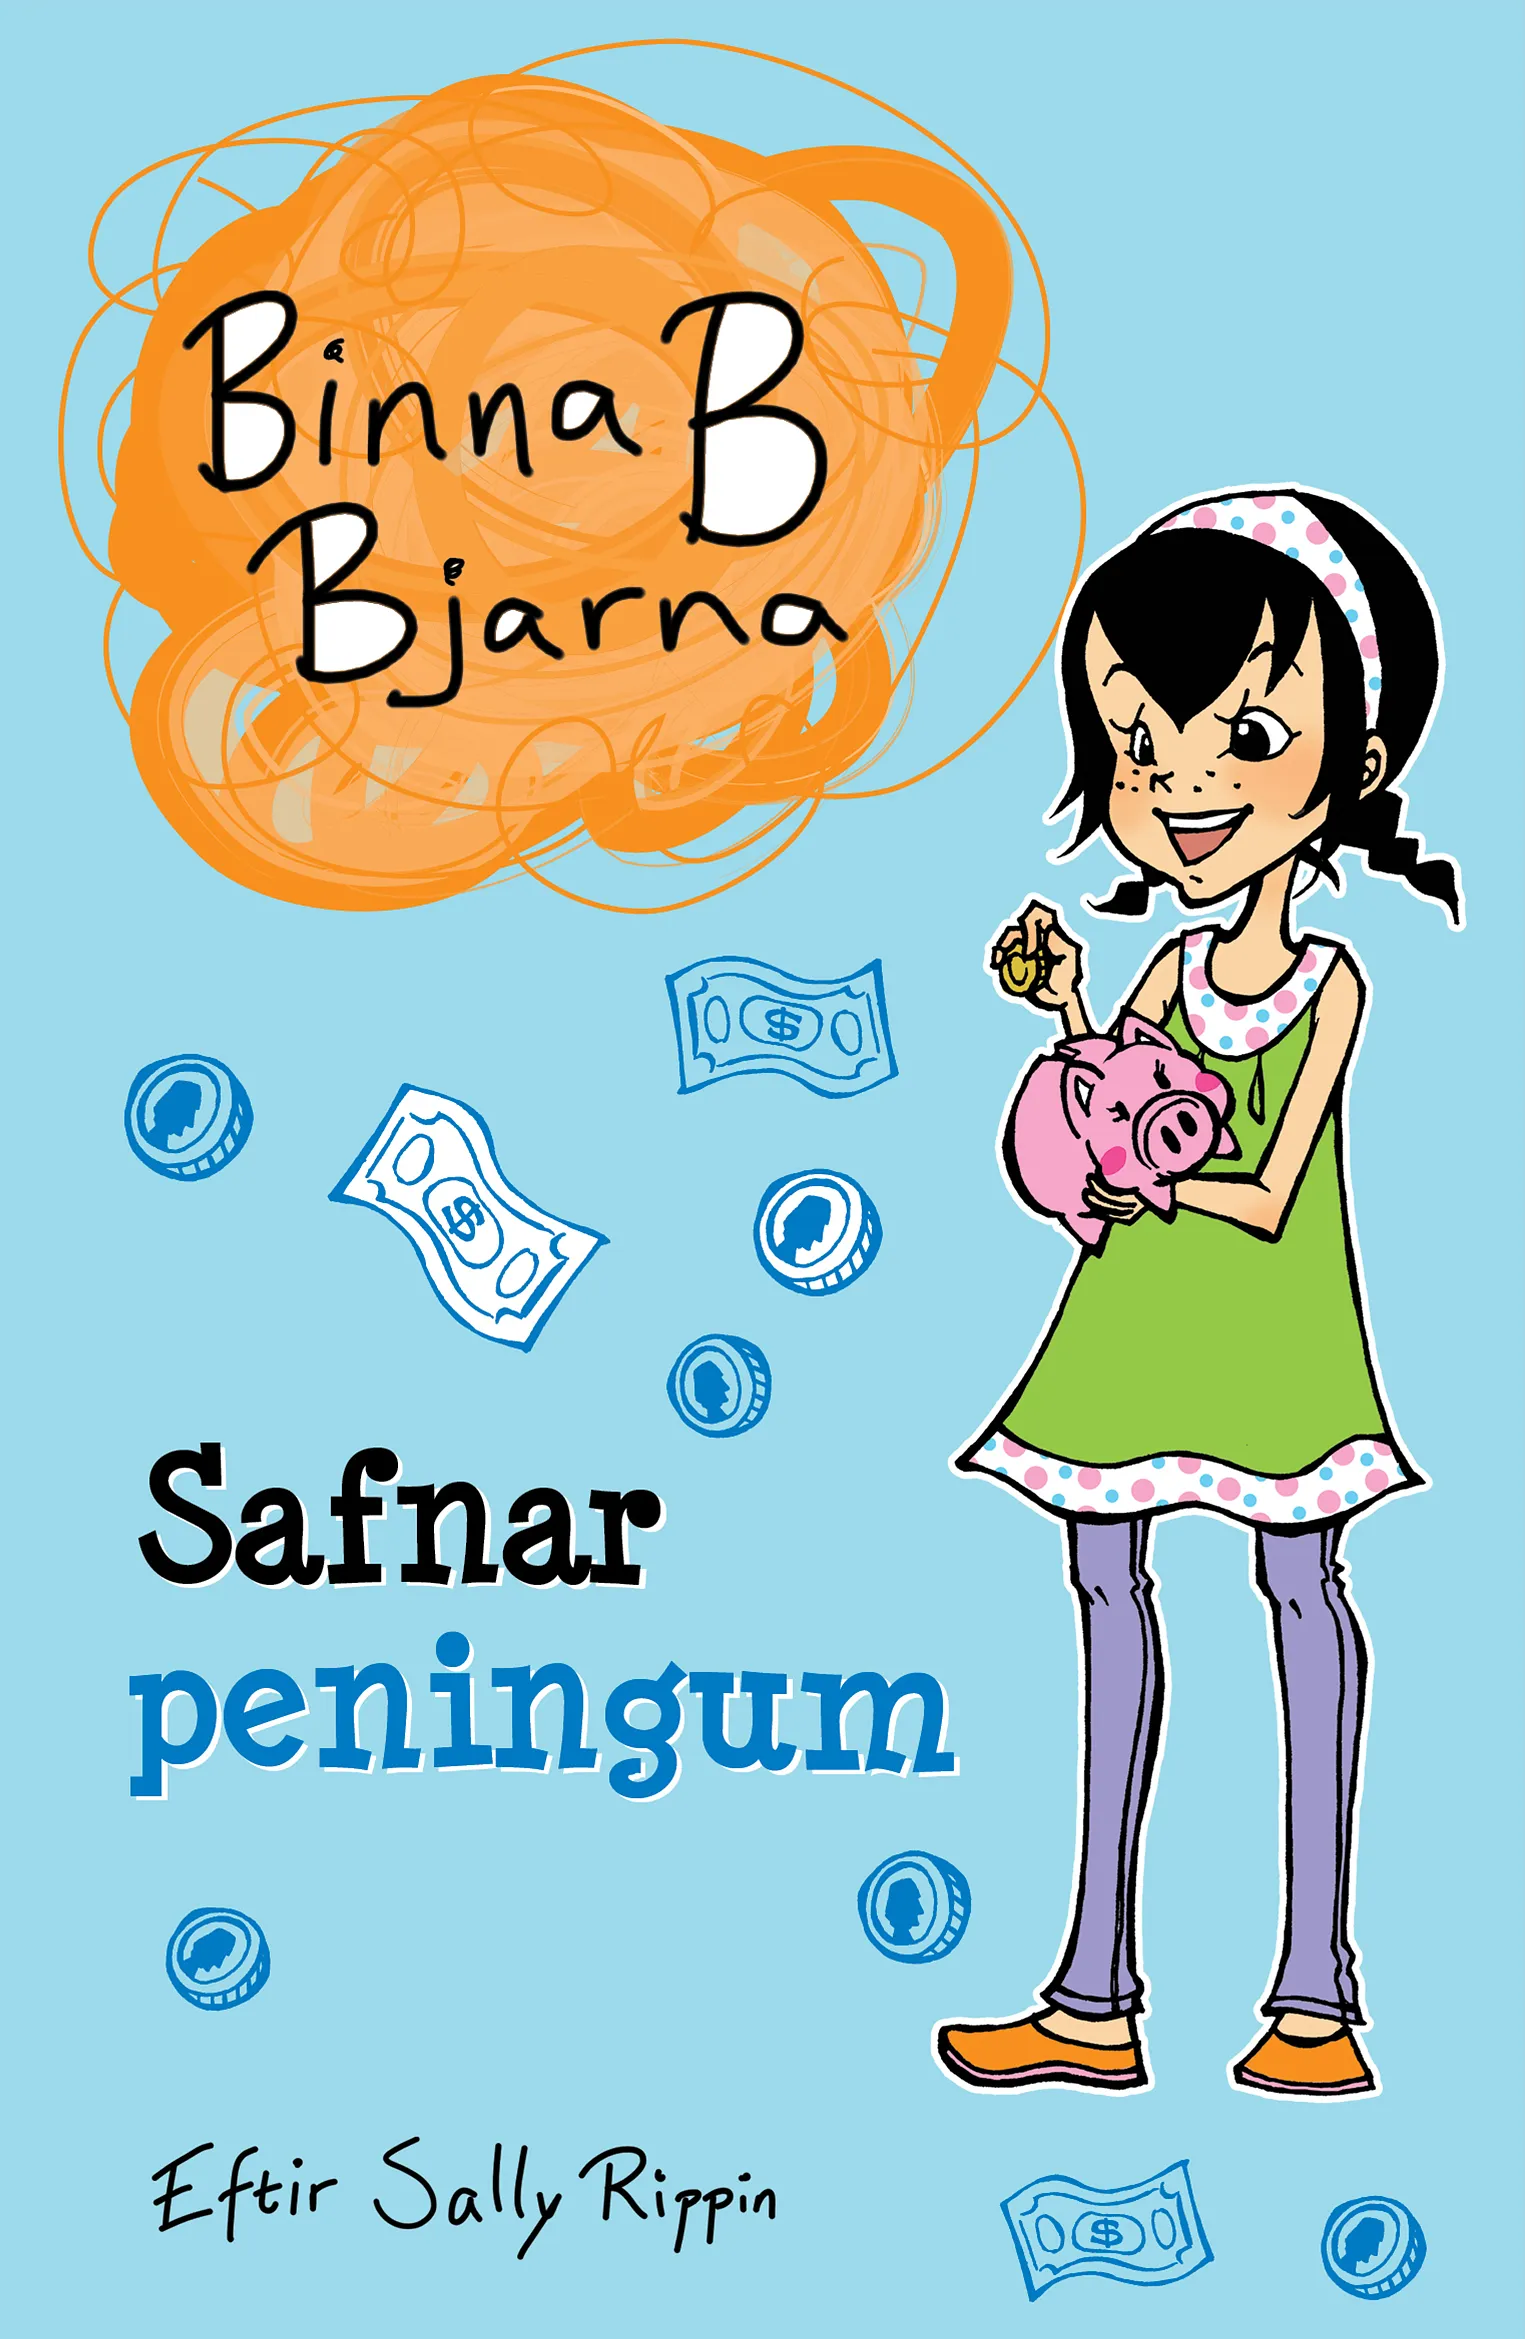 Bókakápa: Binna B Bjarna Safnar peningum https://verslun.rosakot.is/collections/binna-b-bjarna/products/binna-b-bjarna-safnar-peningum